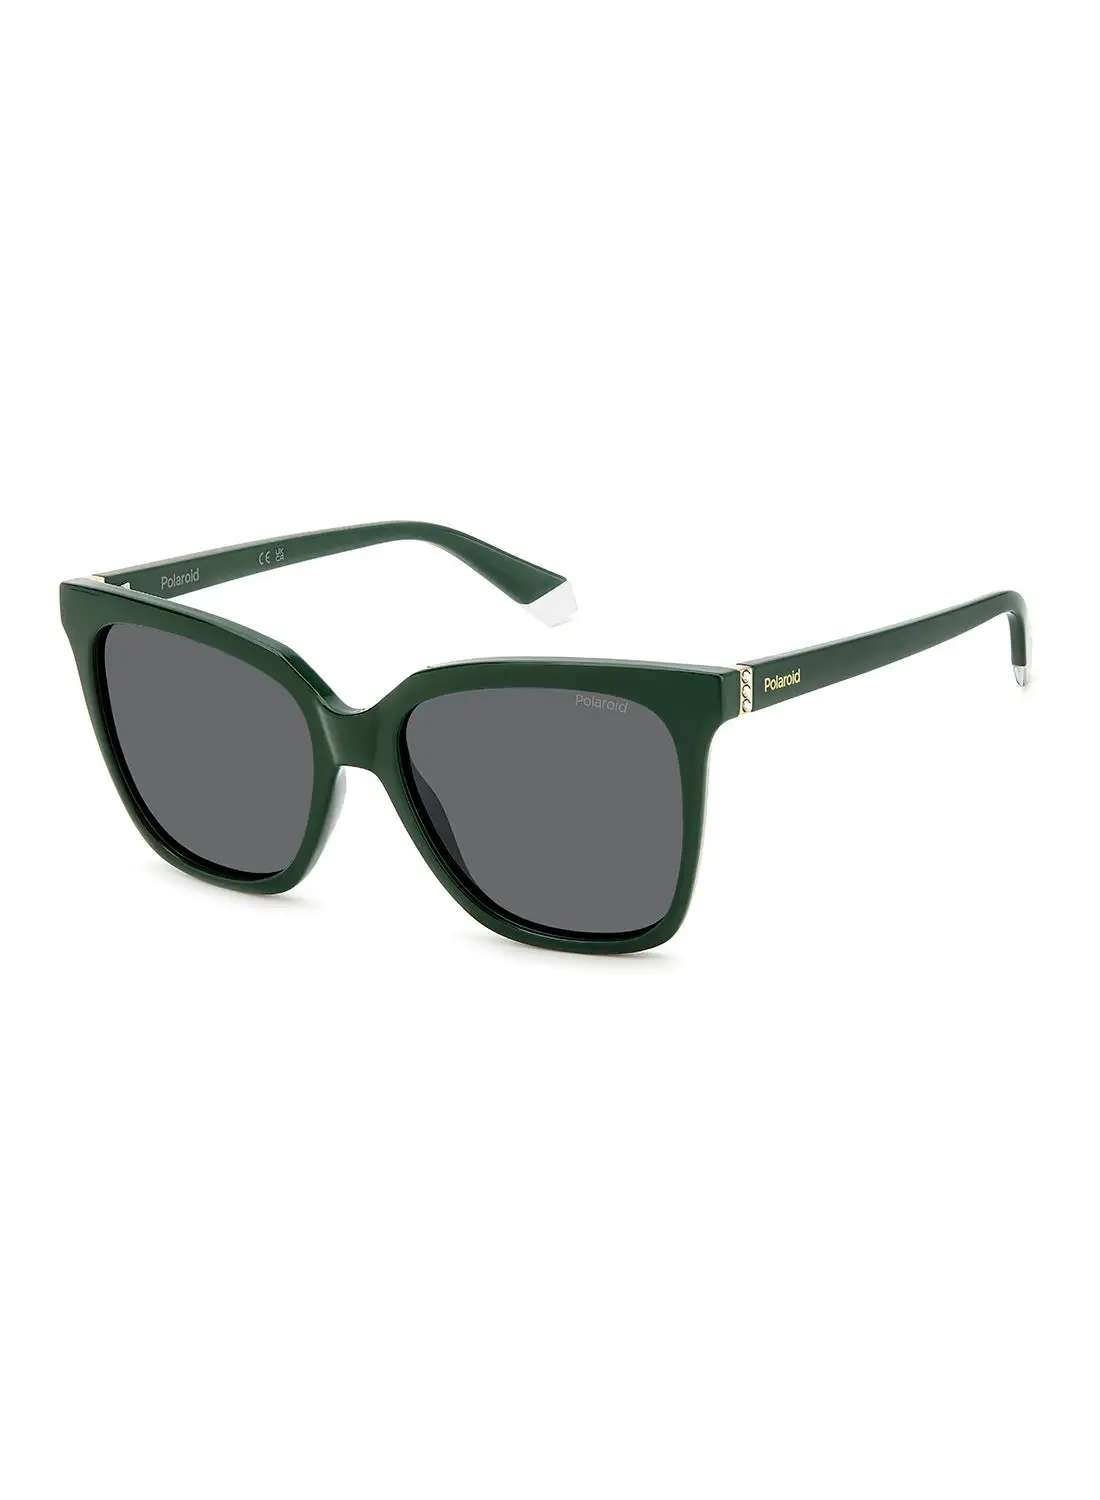 Polaroid Women's Polarized Square Sunglasses - Pld 4155/S/X Green Millimeter - Lens Size: 55 Mm